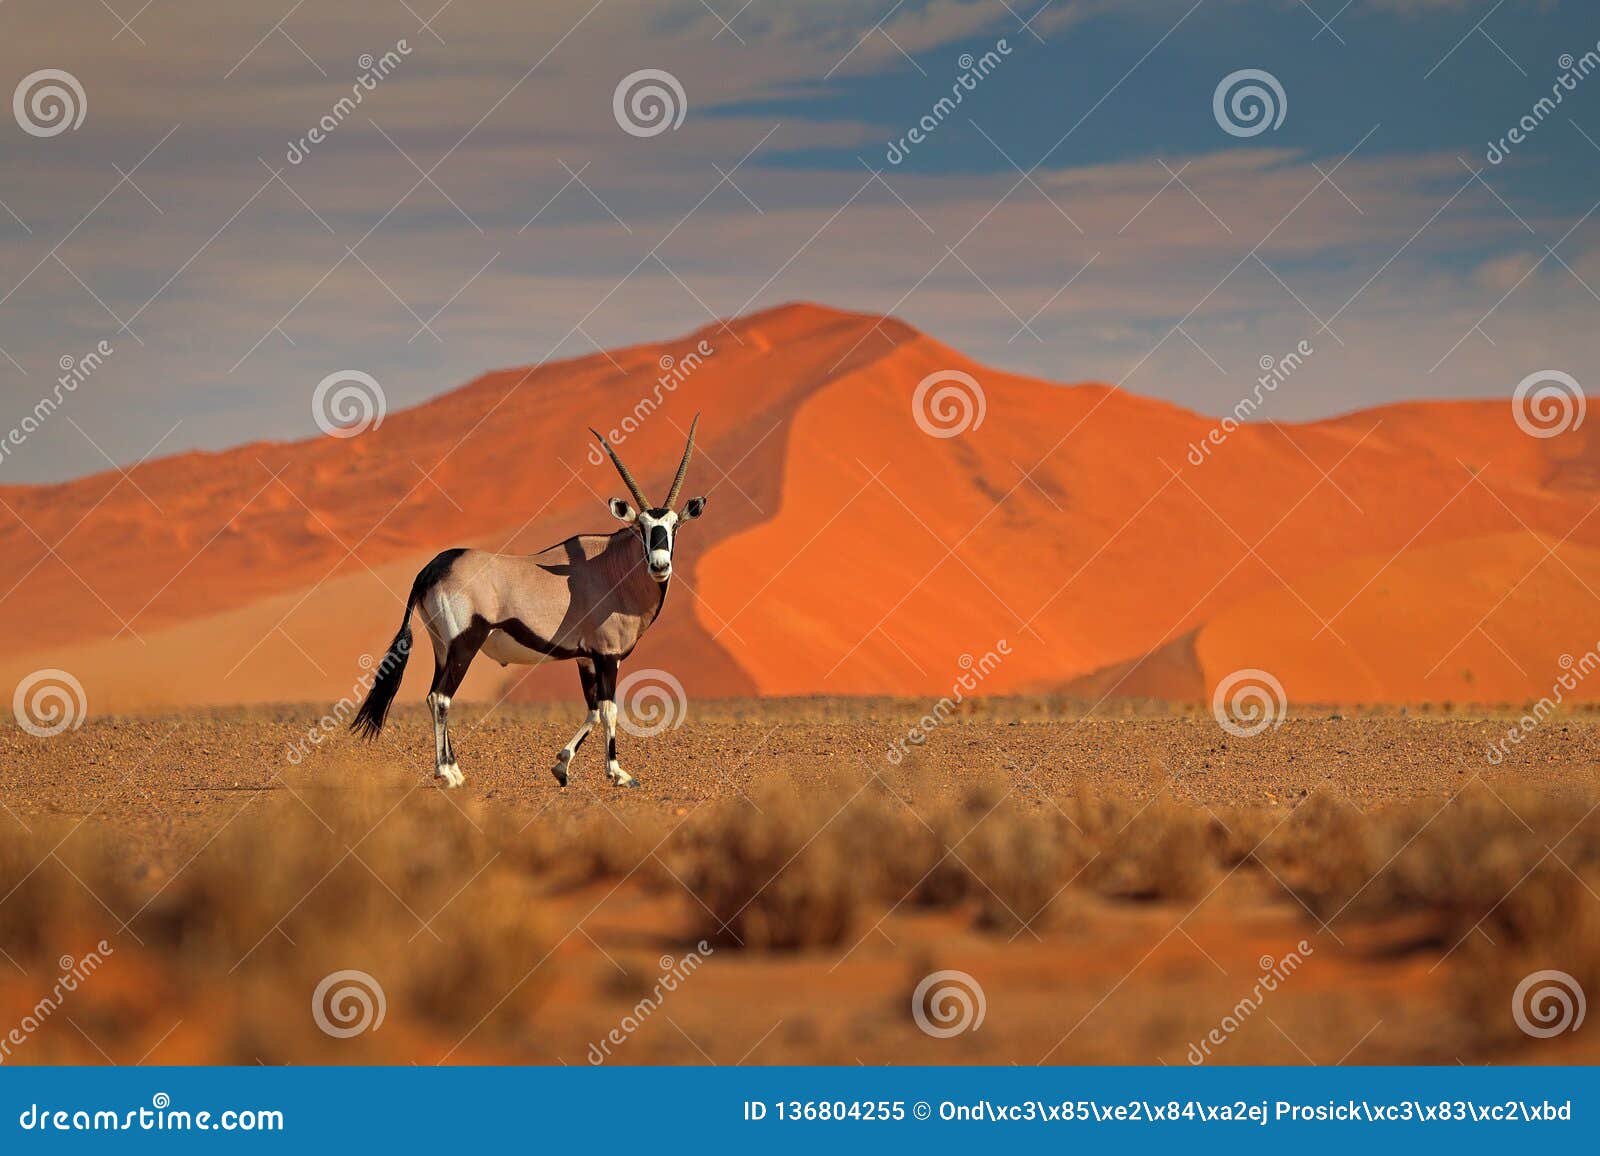 gemsbok with orange sand dune evening sunset. gemsbuck, oryx gazella, large antelope in nature habitat, sossusvlei, namibia. wild